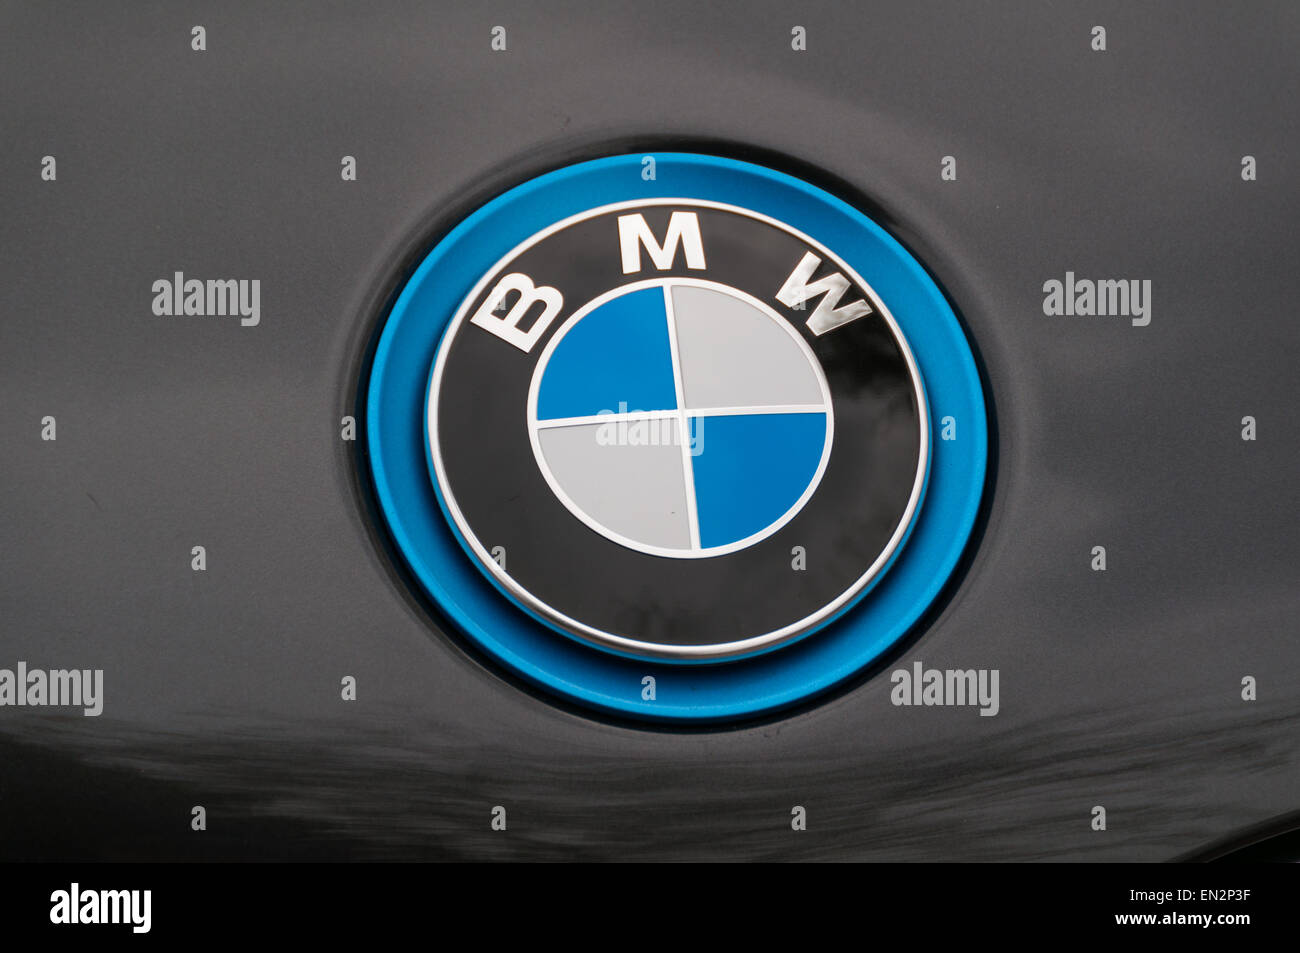 bmw logo black background